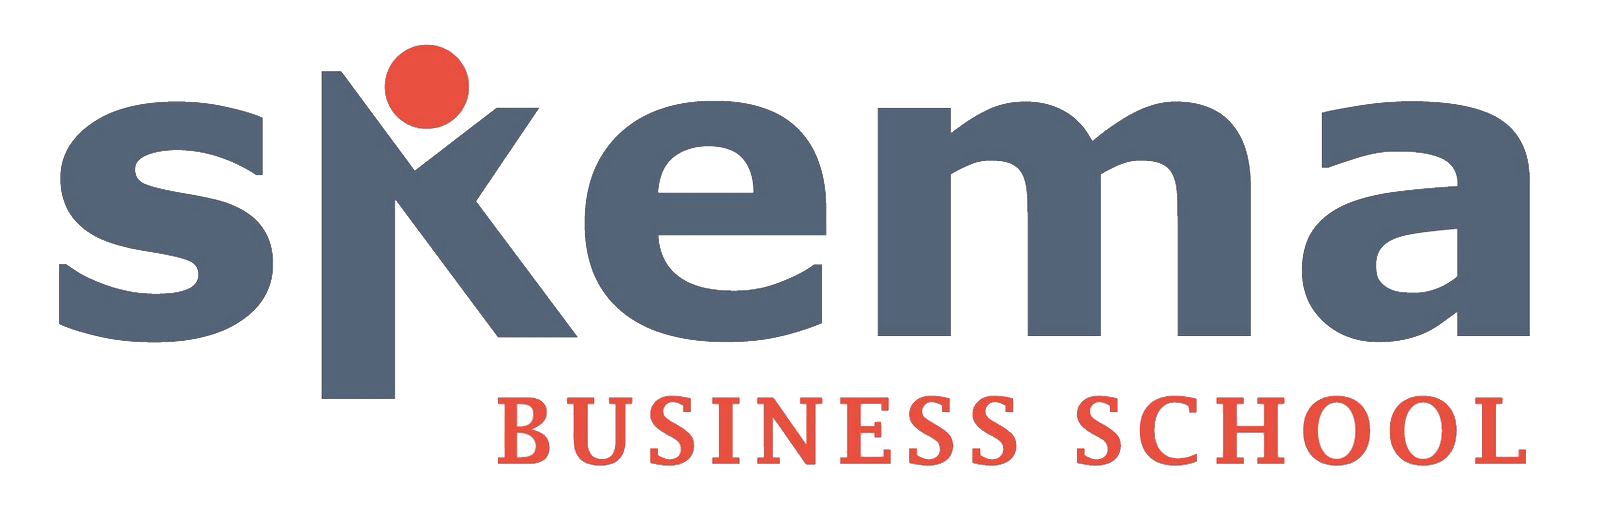 Logo école Skema Business School